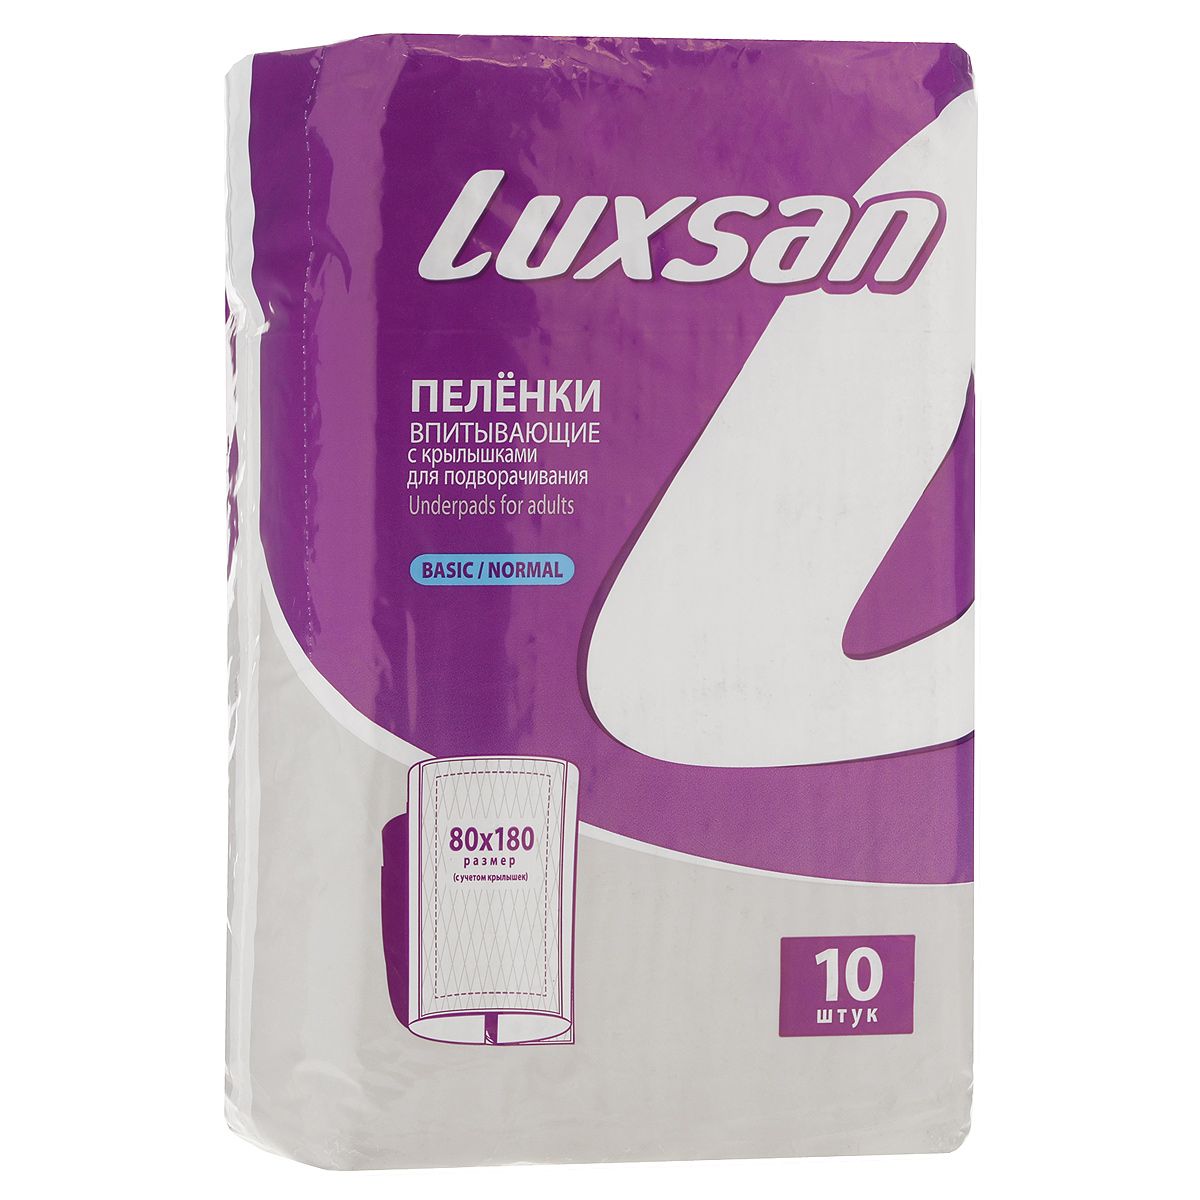 Luxsan    